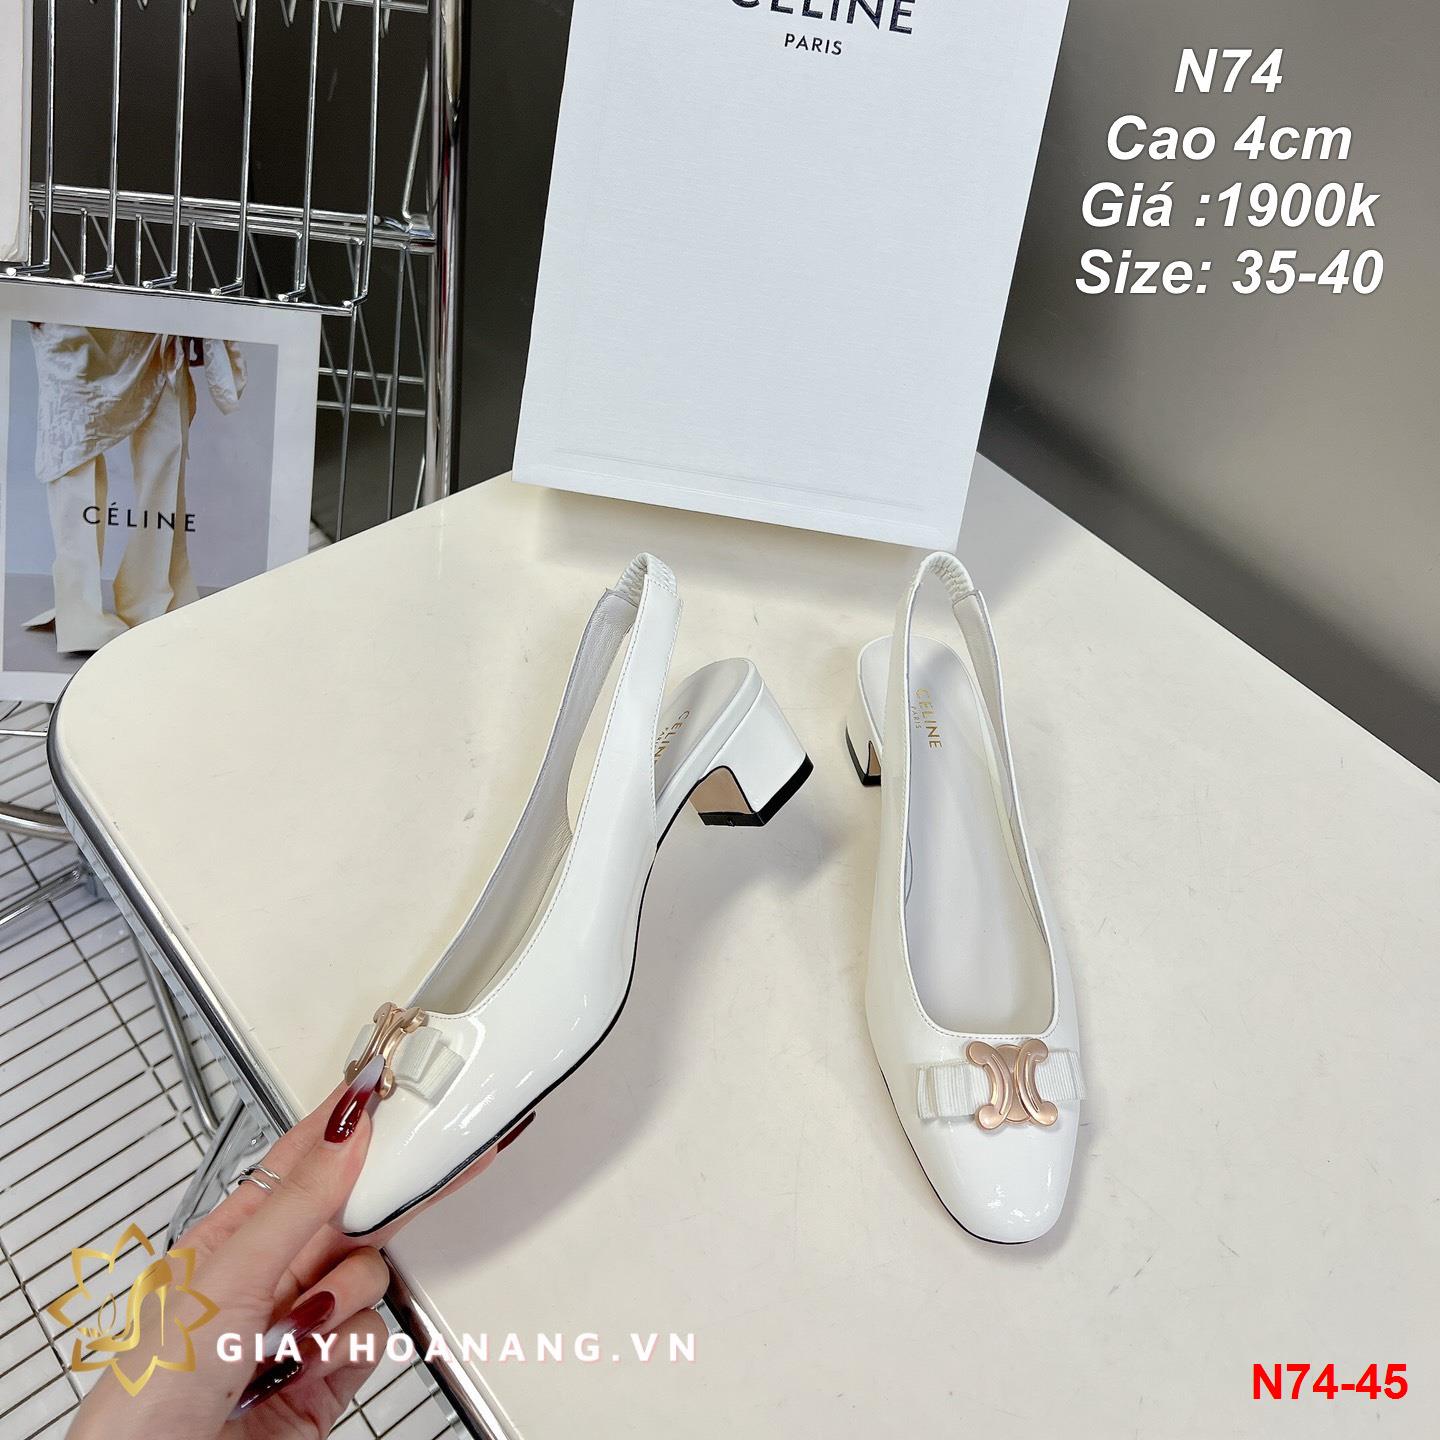 N74-45 Celine sandal cao 4cm siêu cấp